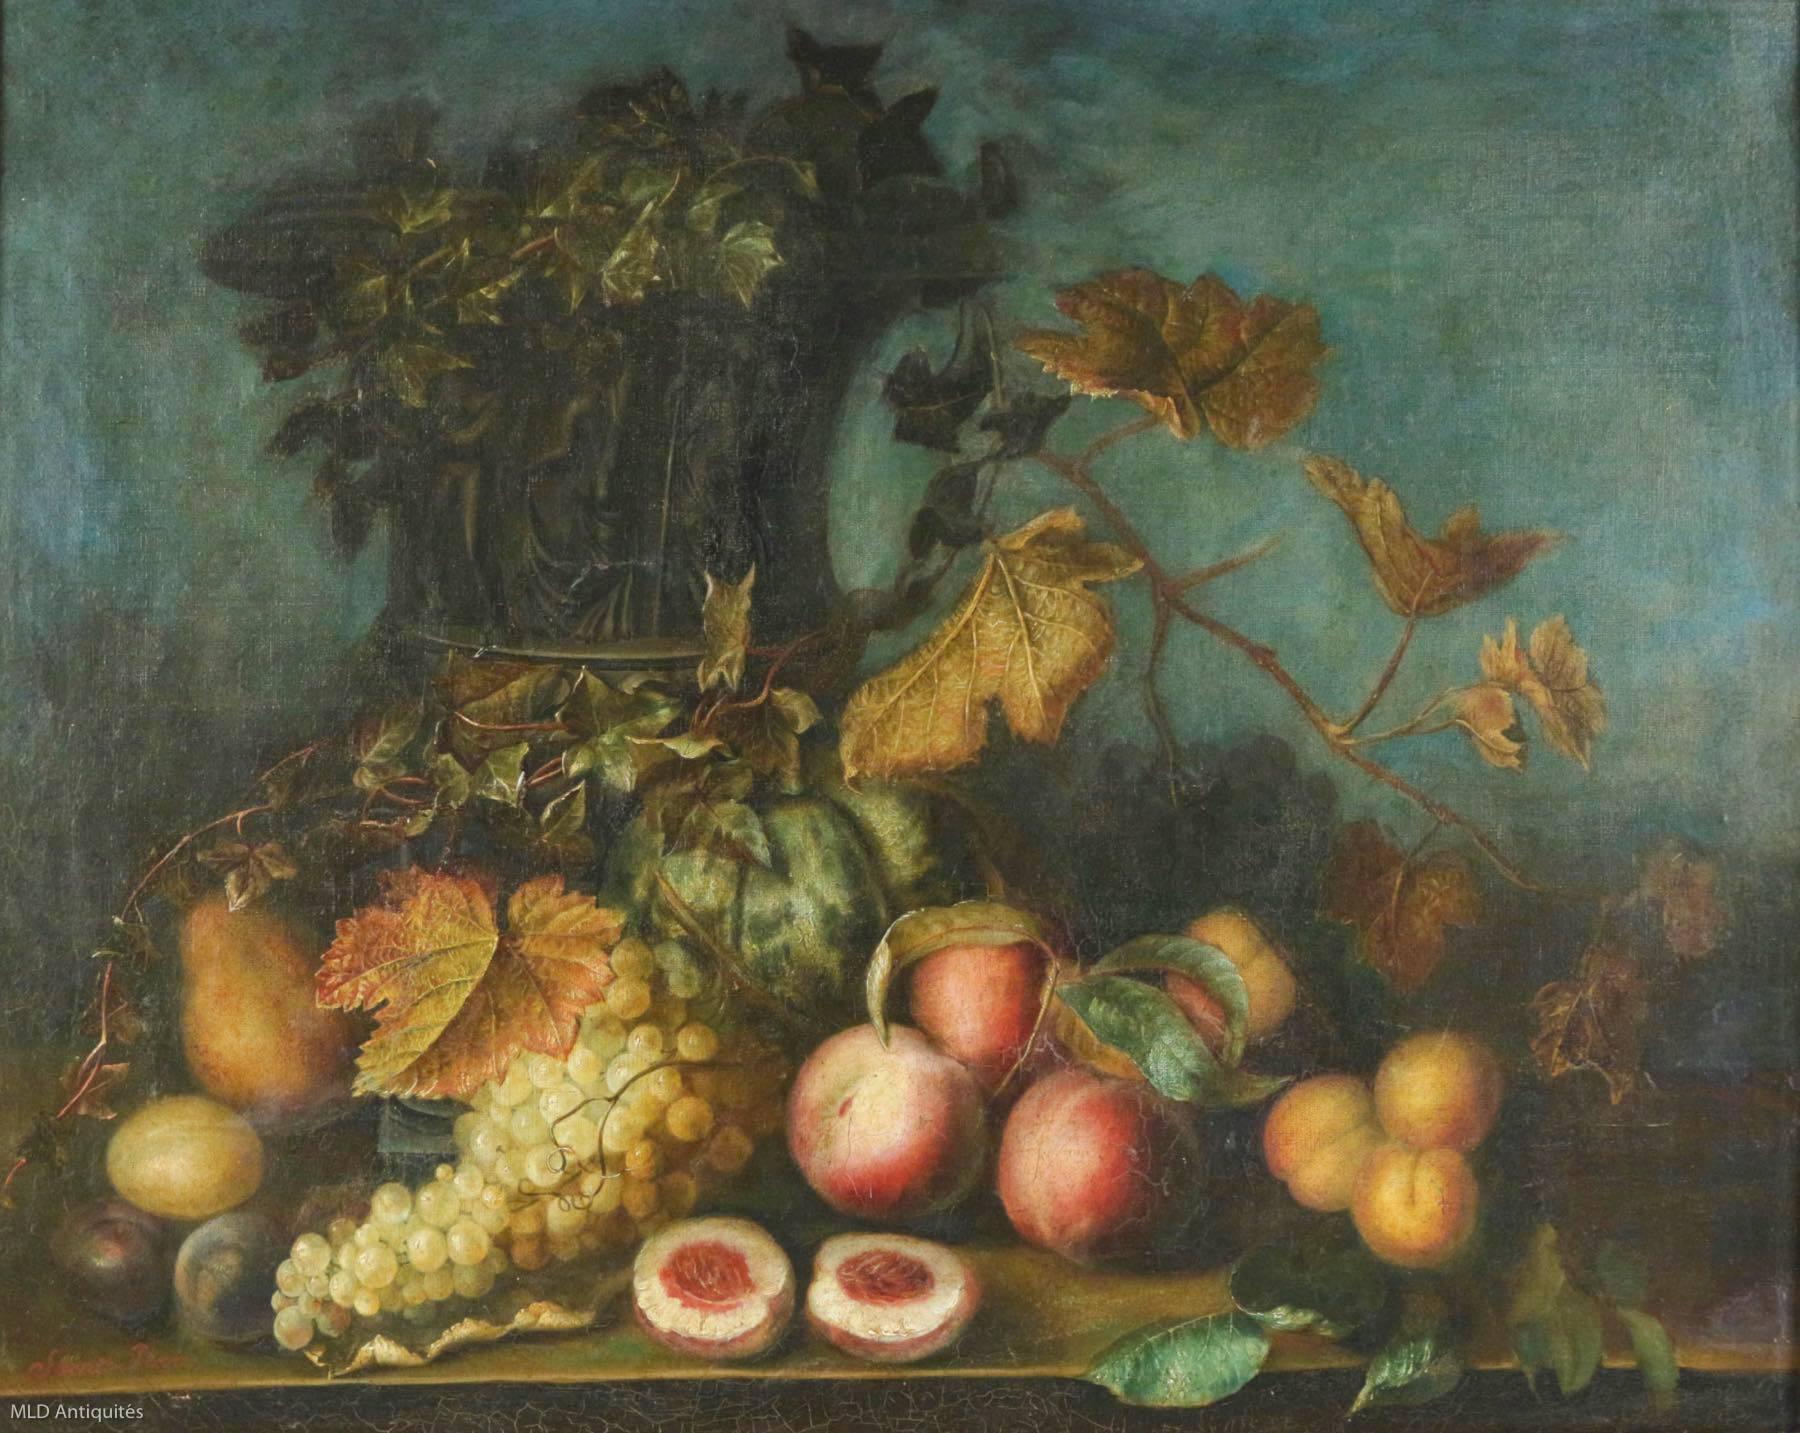 Romantic Simon Saint Jean Oil on Canvas Still Life with Fruits, circa 1830-1840